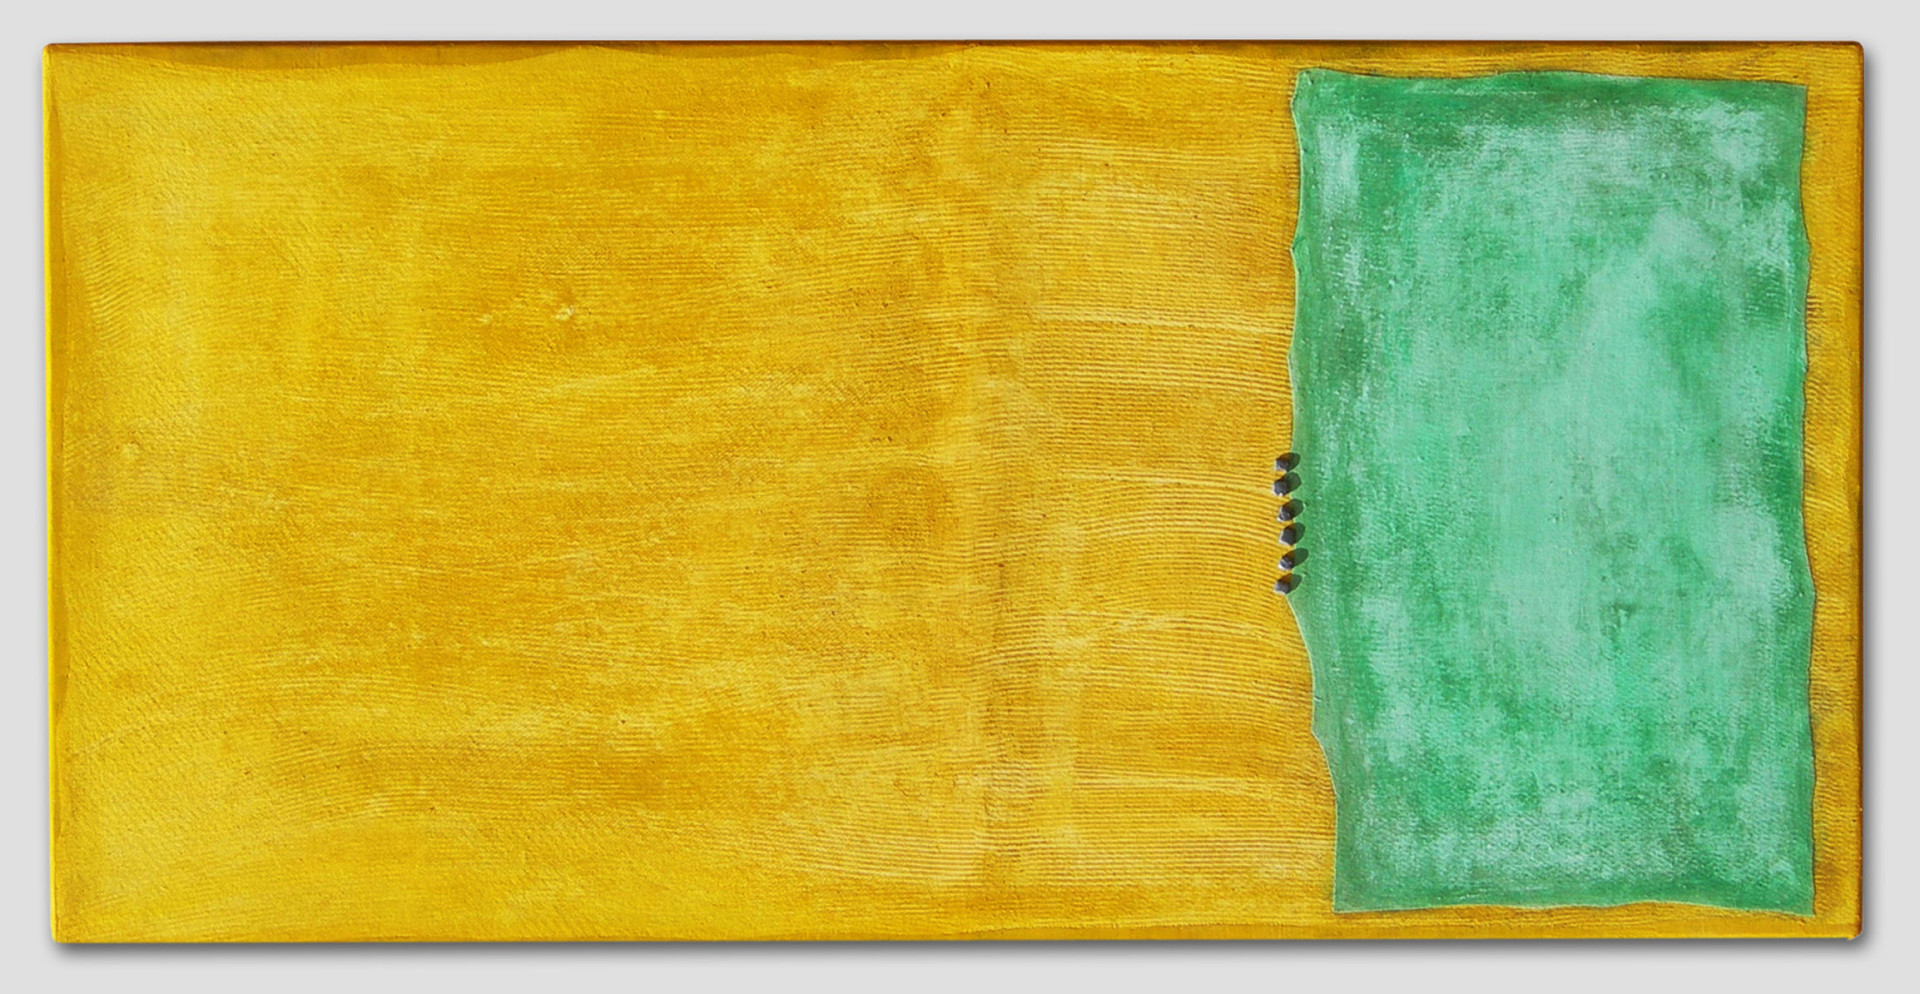 026-REBIS -TOTEM bidimensionale  
- 2008  -
mixed media on canvas panel  
120 x 60 cm.